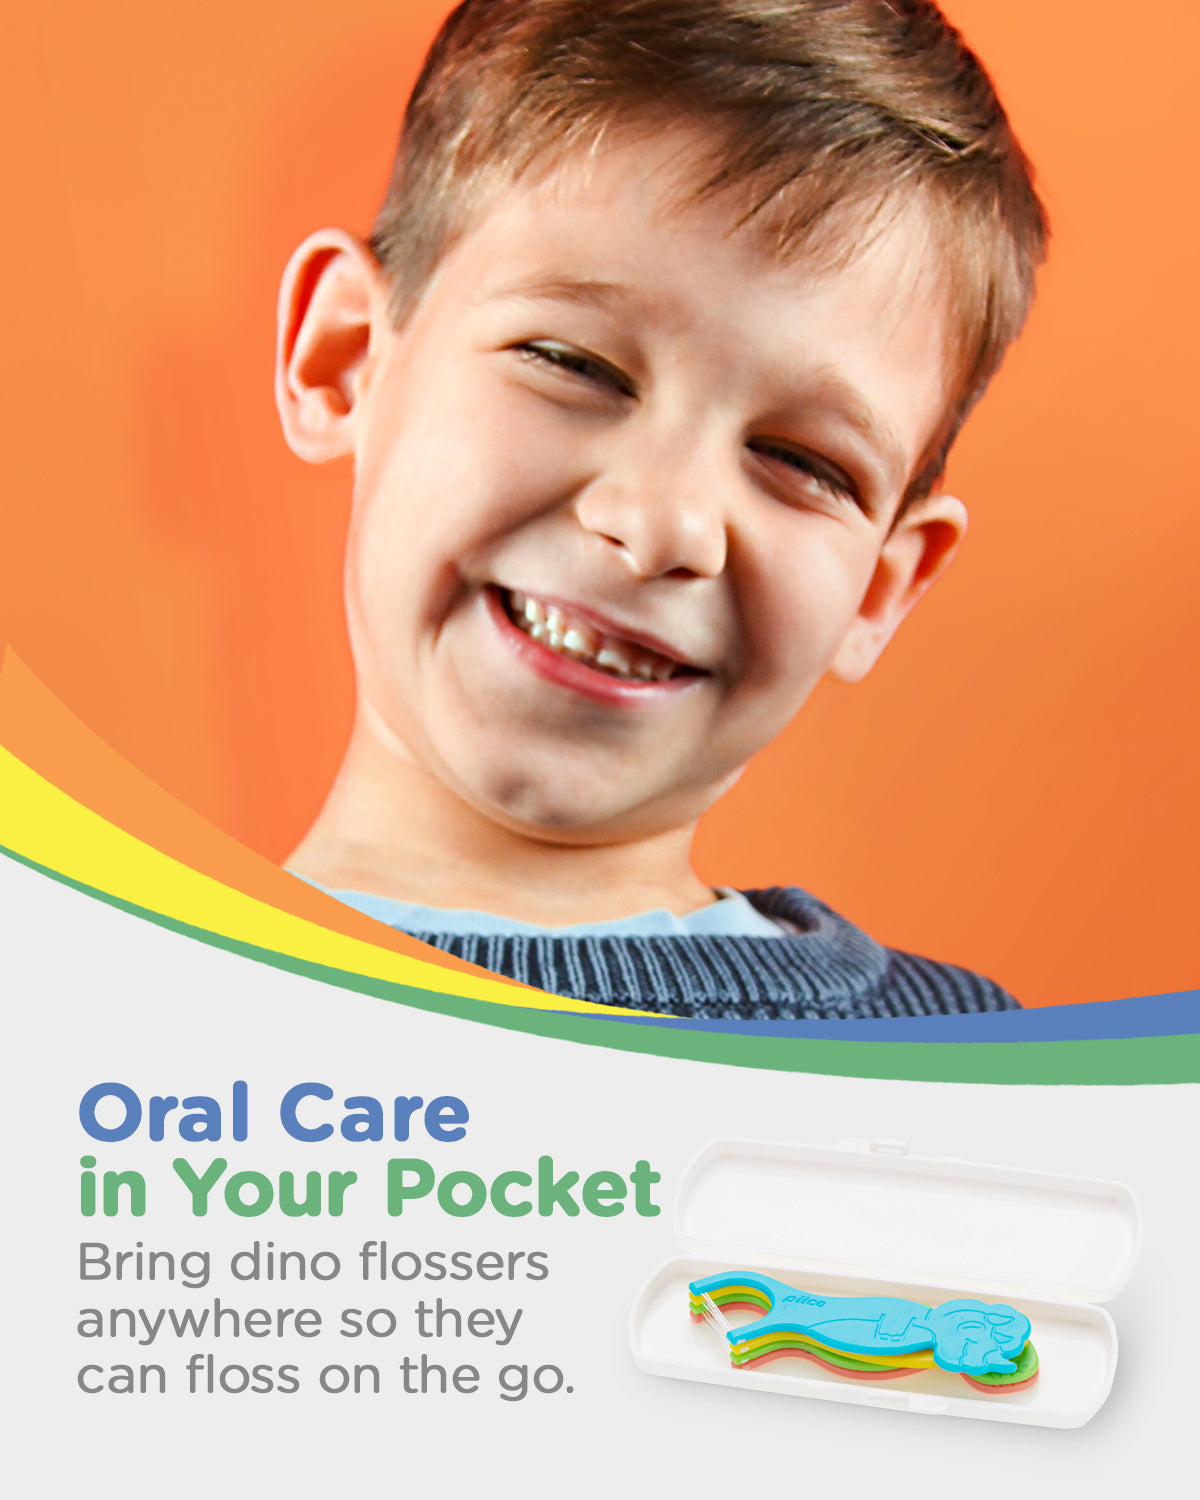 Dental care product freebies